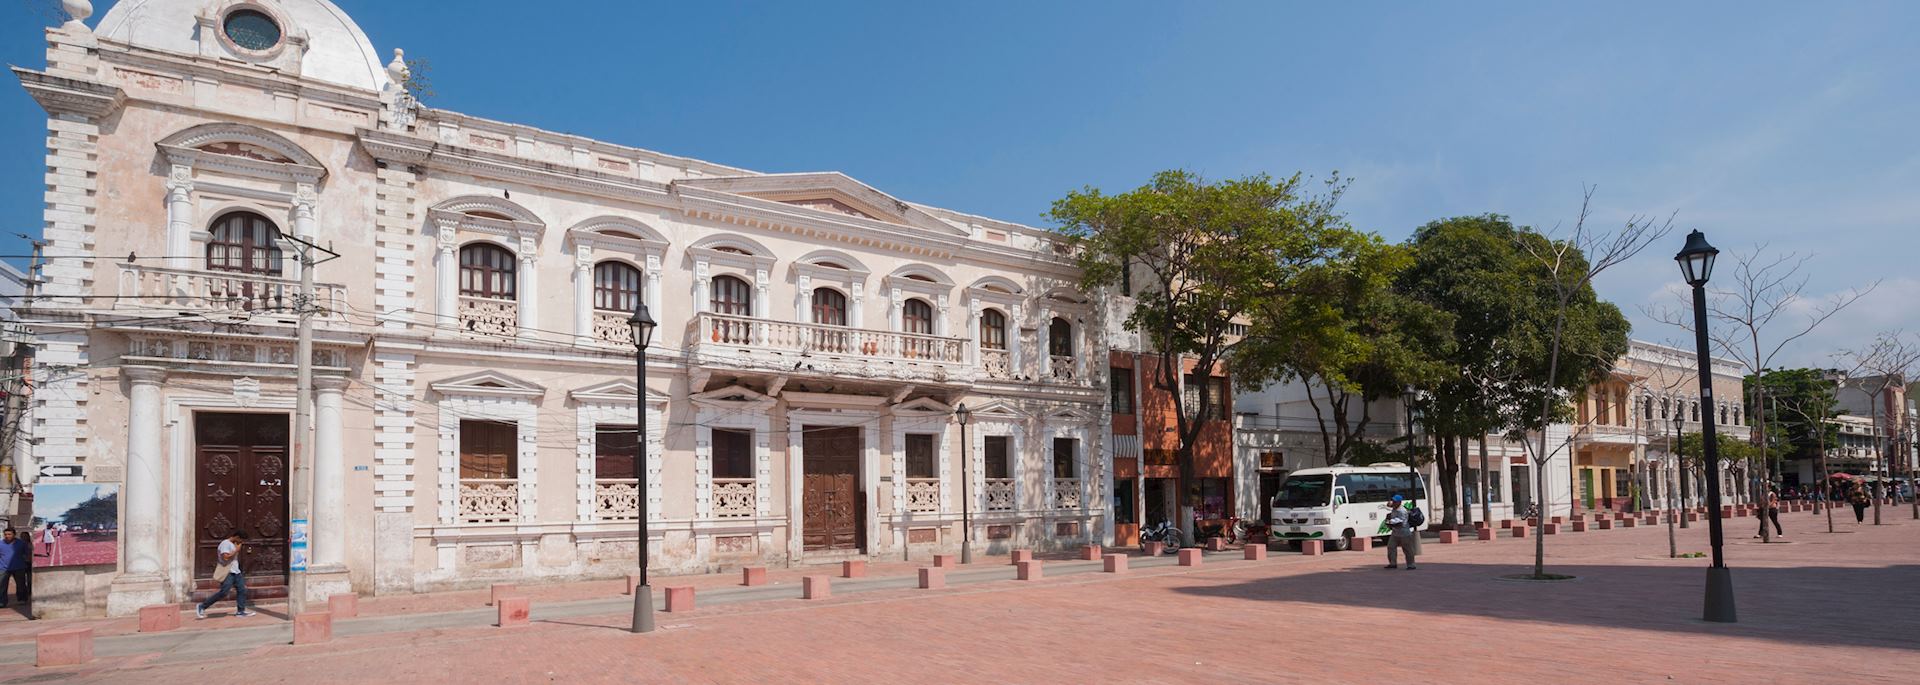 Historic buildings in Santa Marta